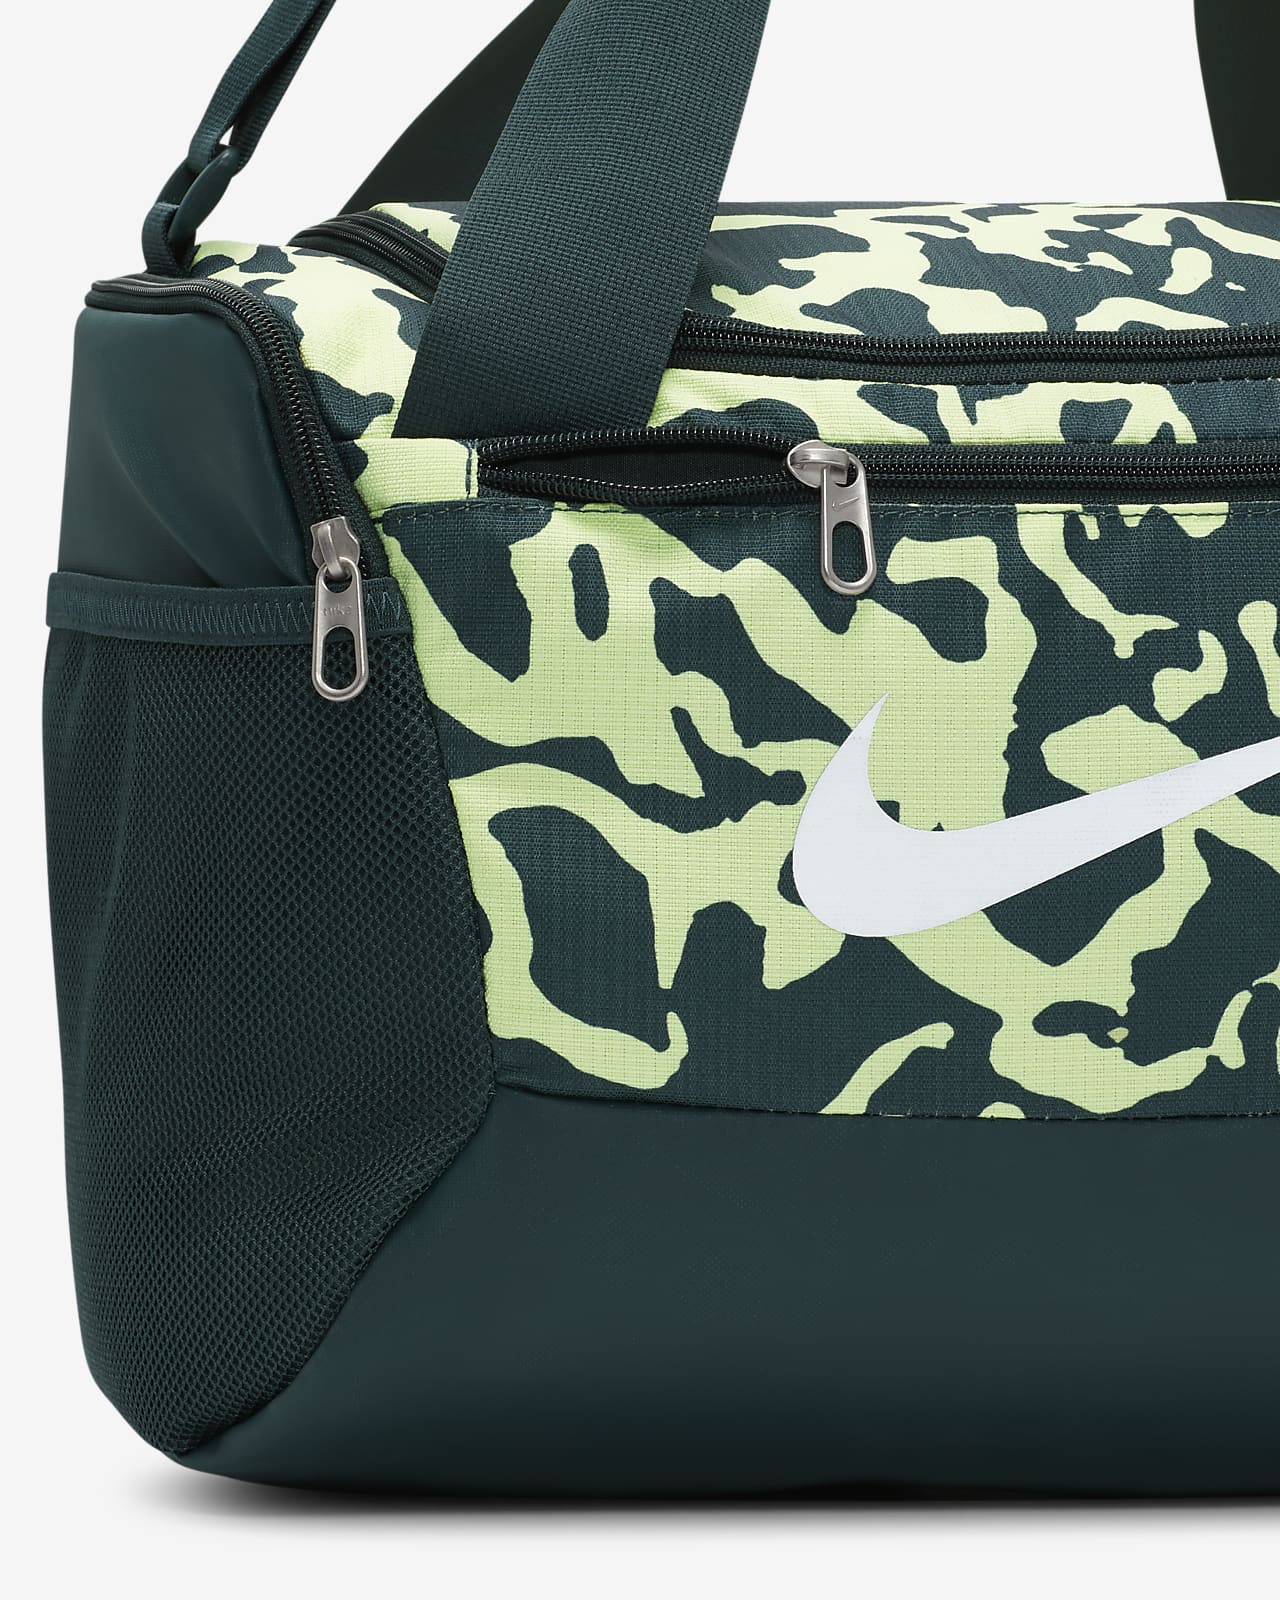 Nike Brasilia Printed Duffel Bag (Extra Small, 25L)